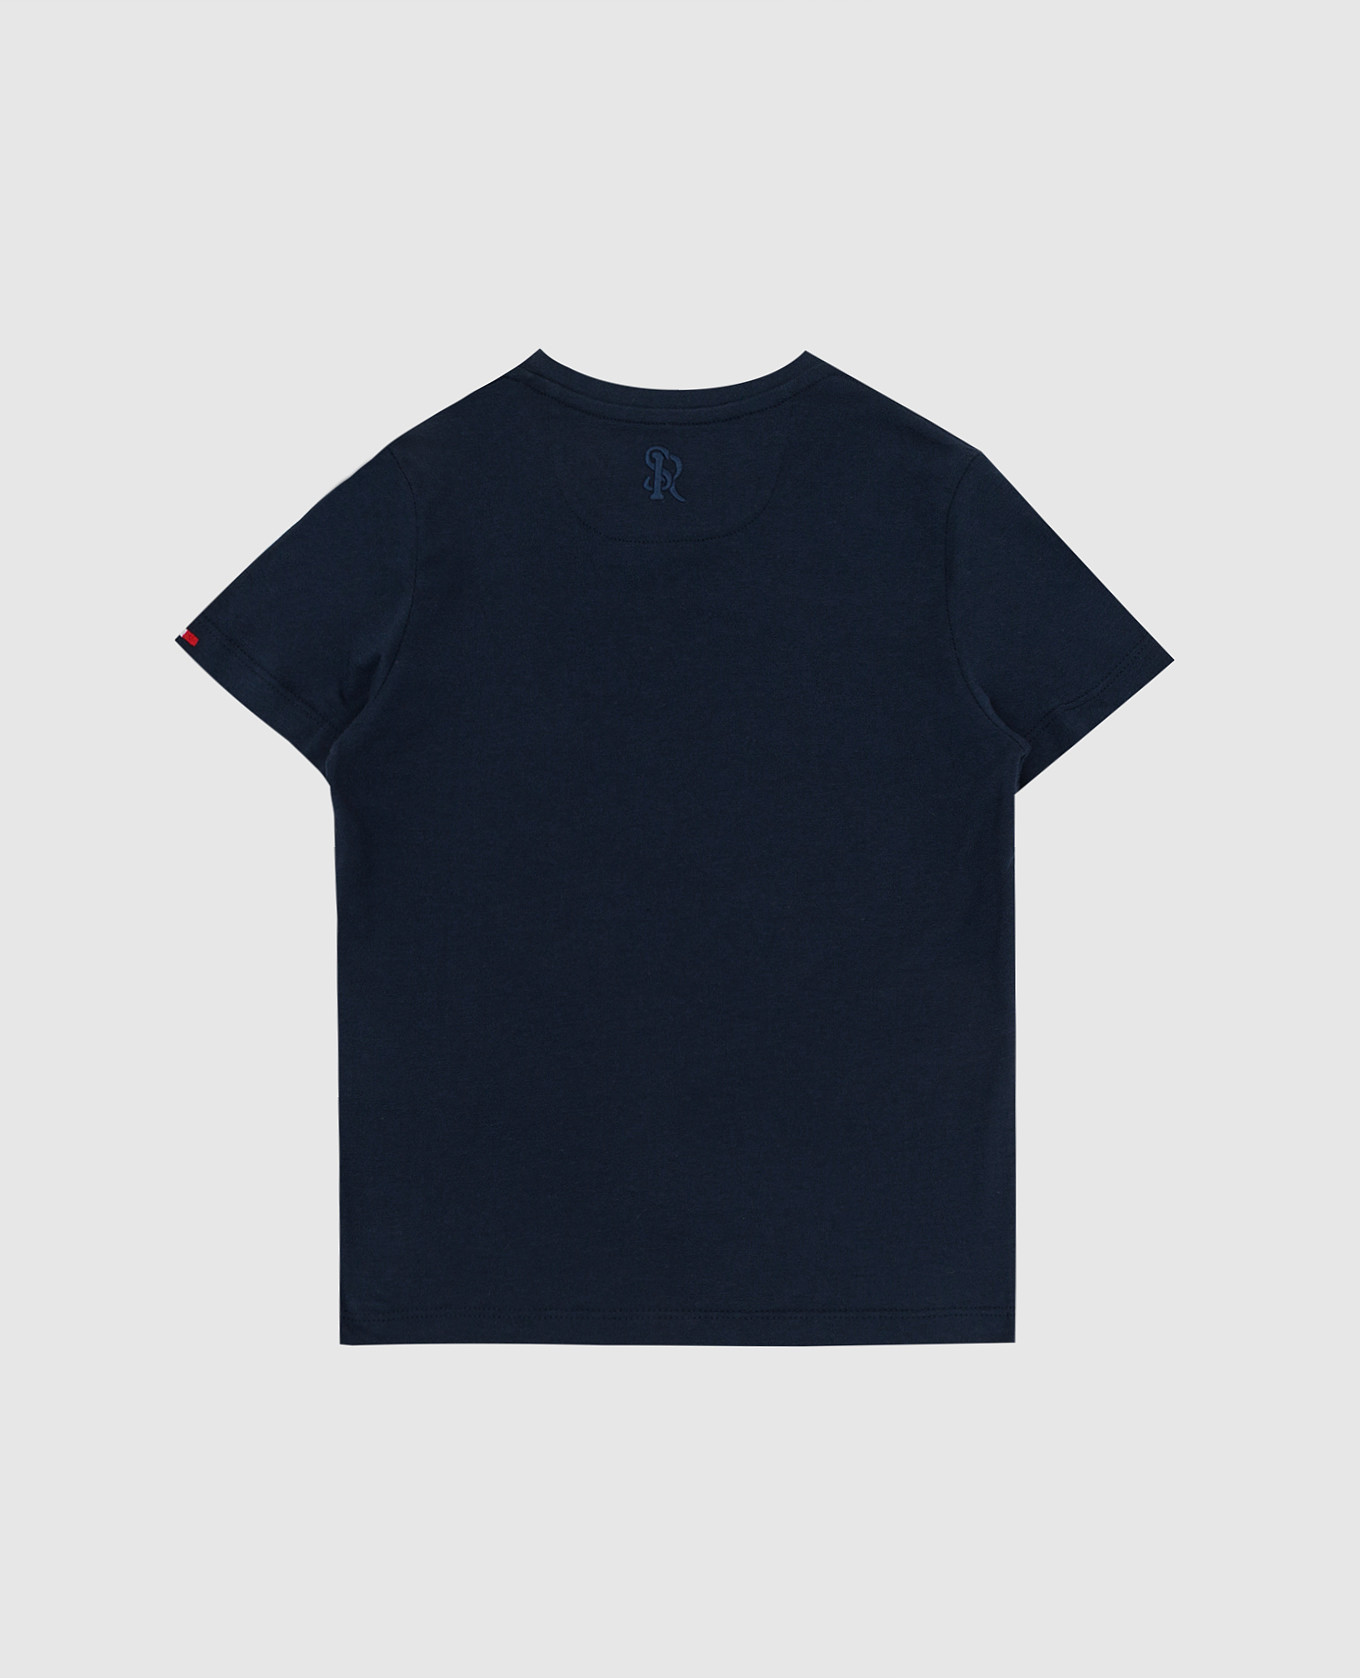 Stefano Ricci Детская темно-синяя футболка с вышивкой YNH8200170803 изображение 2